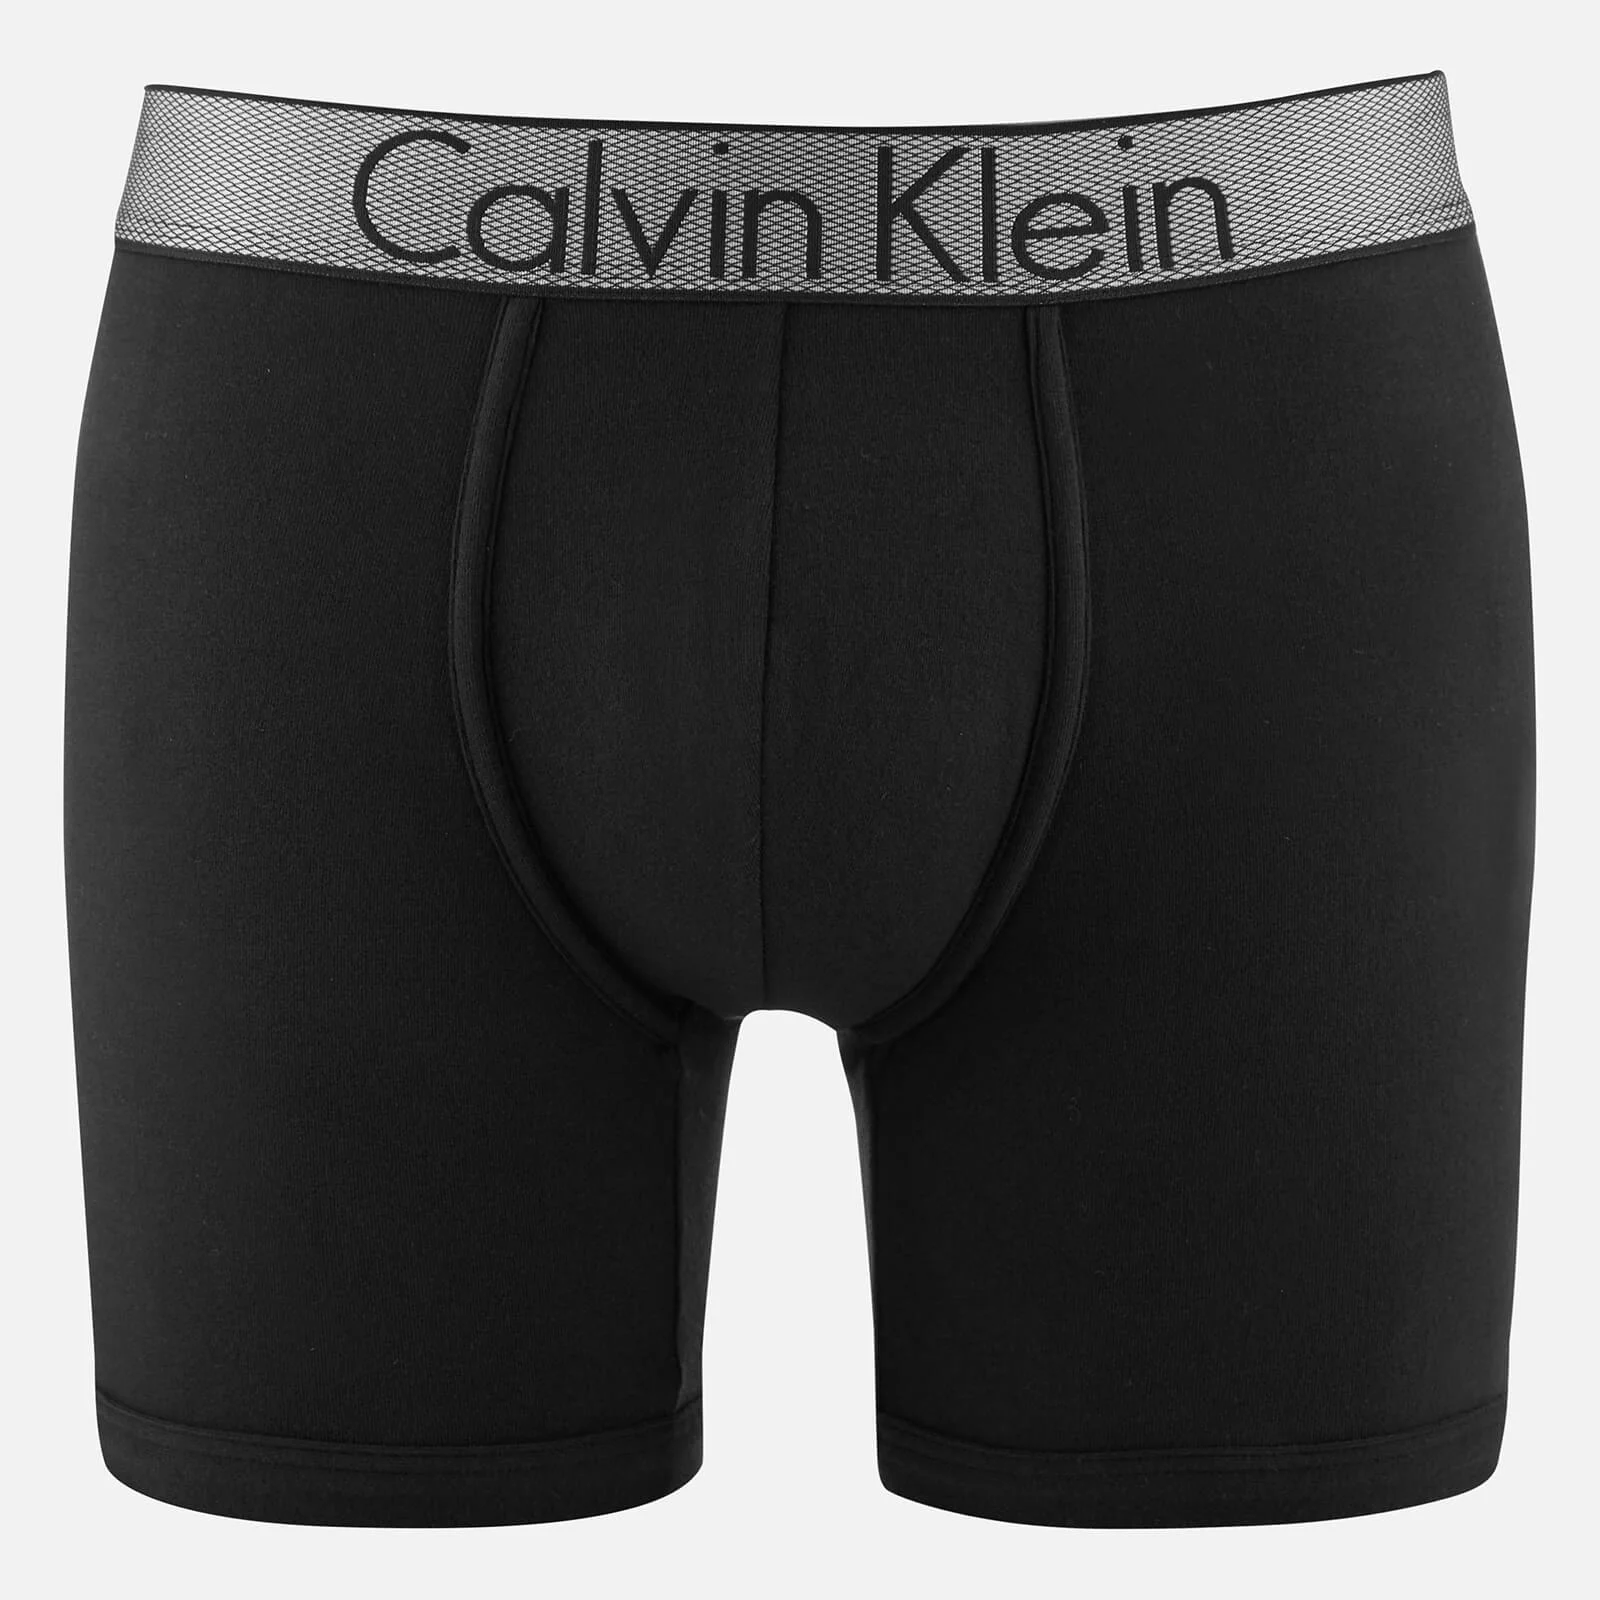 Calvin Klein Men's Boxer Briefs - Black Image 1